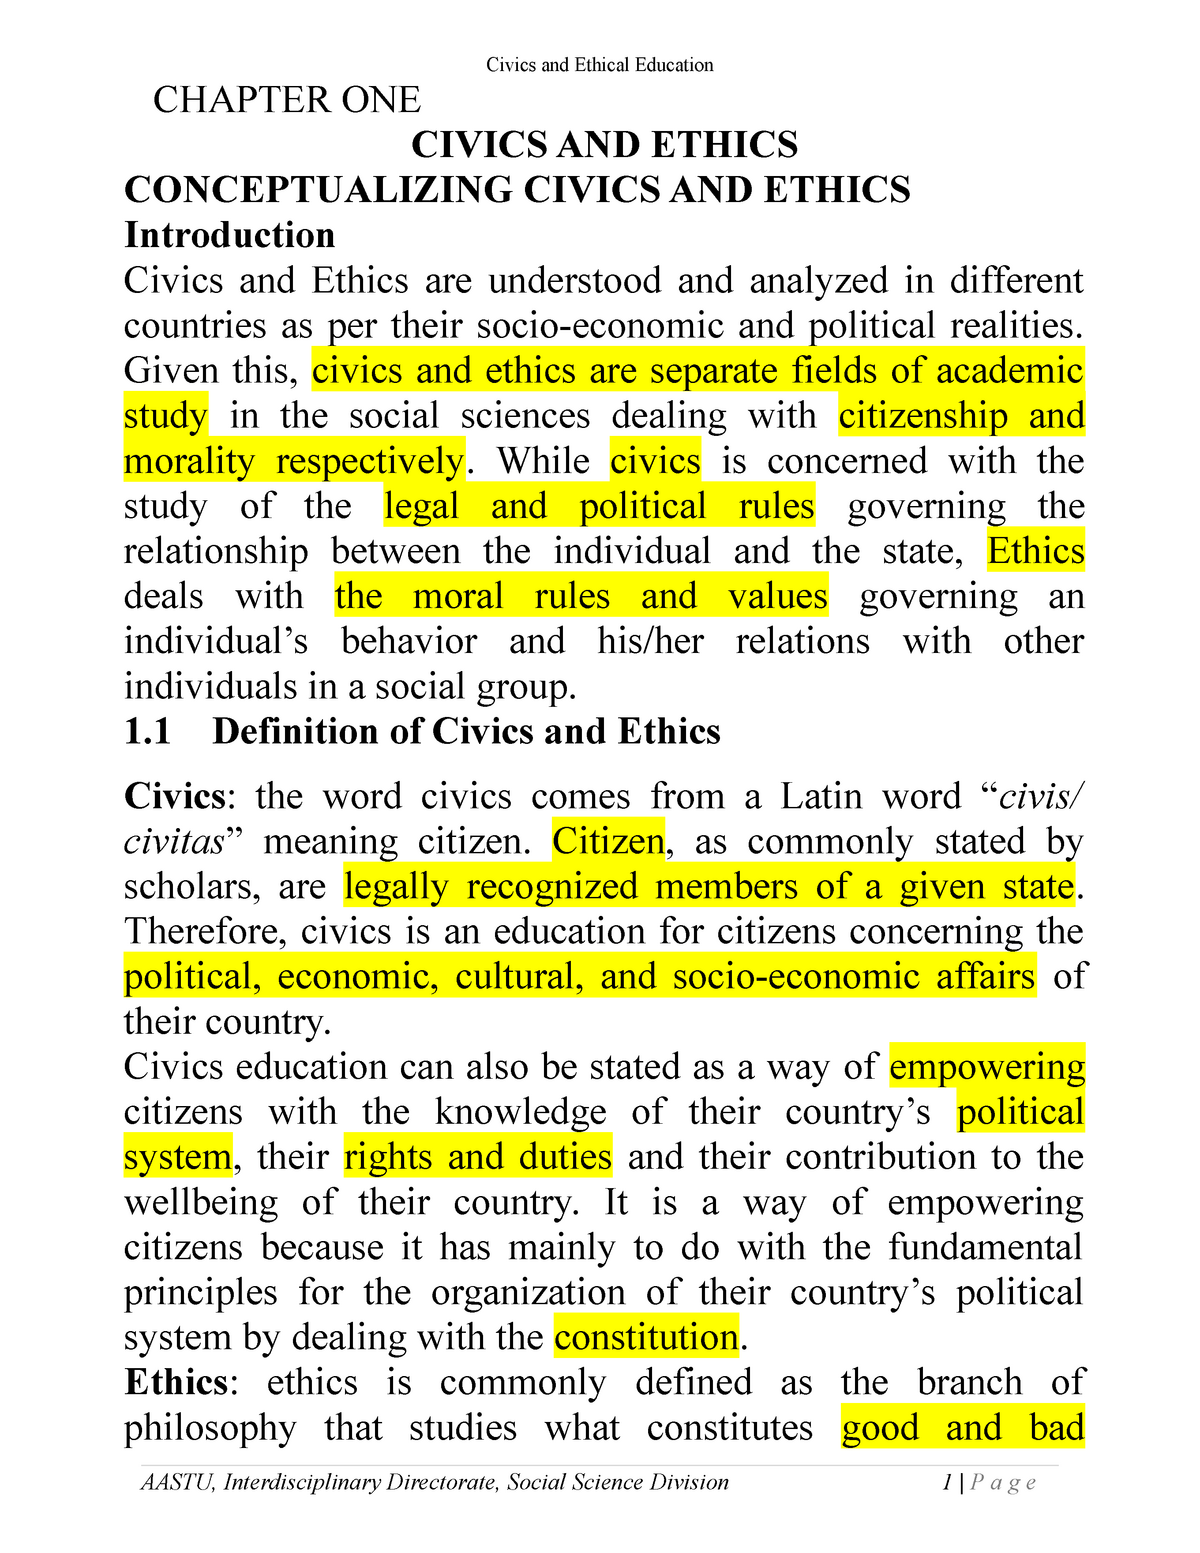 essay on ethics and civics